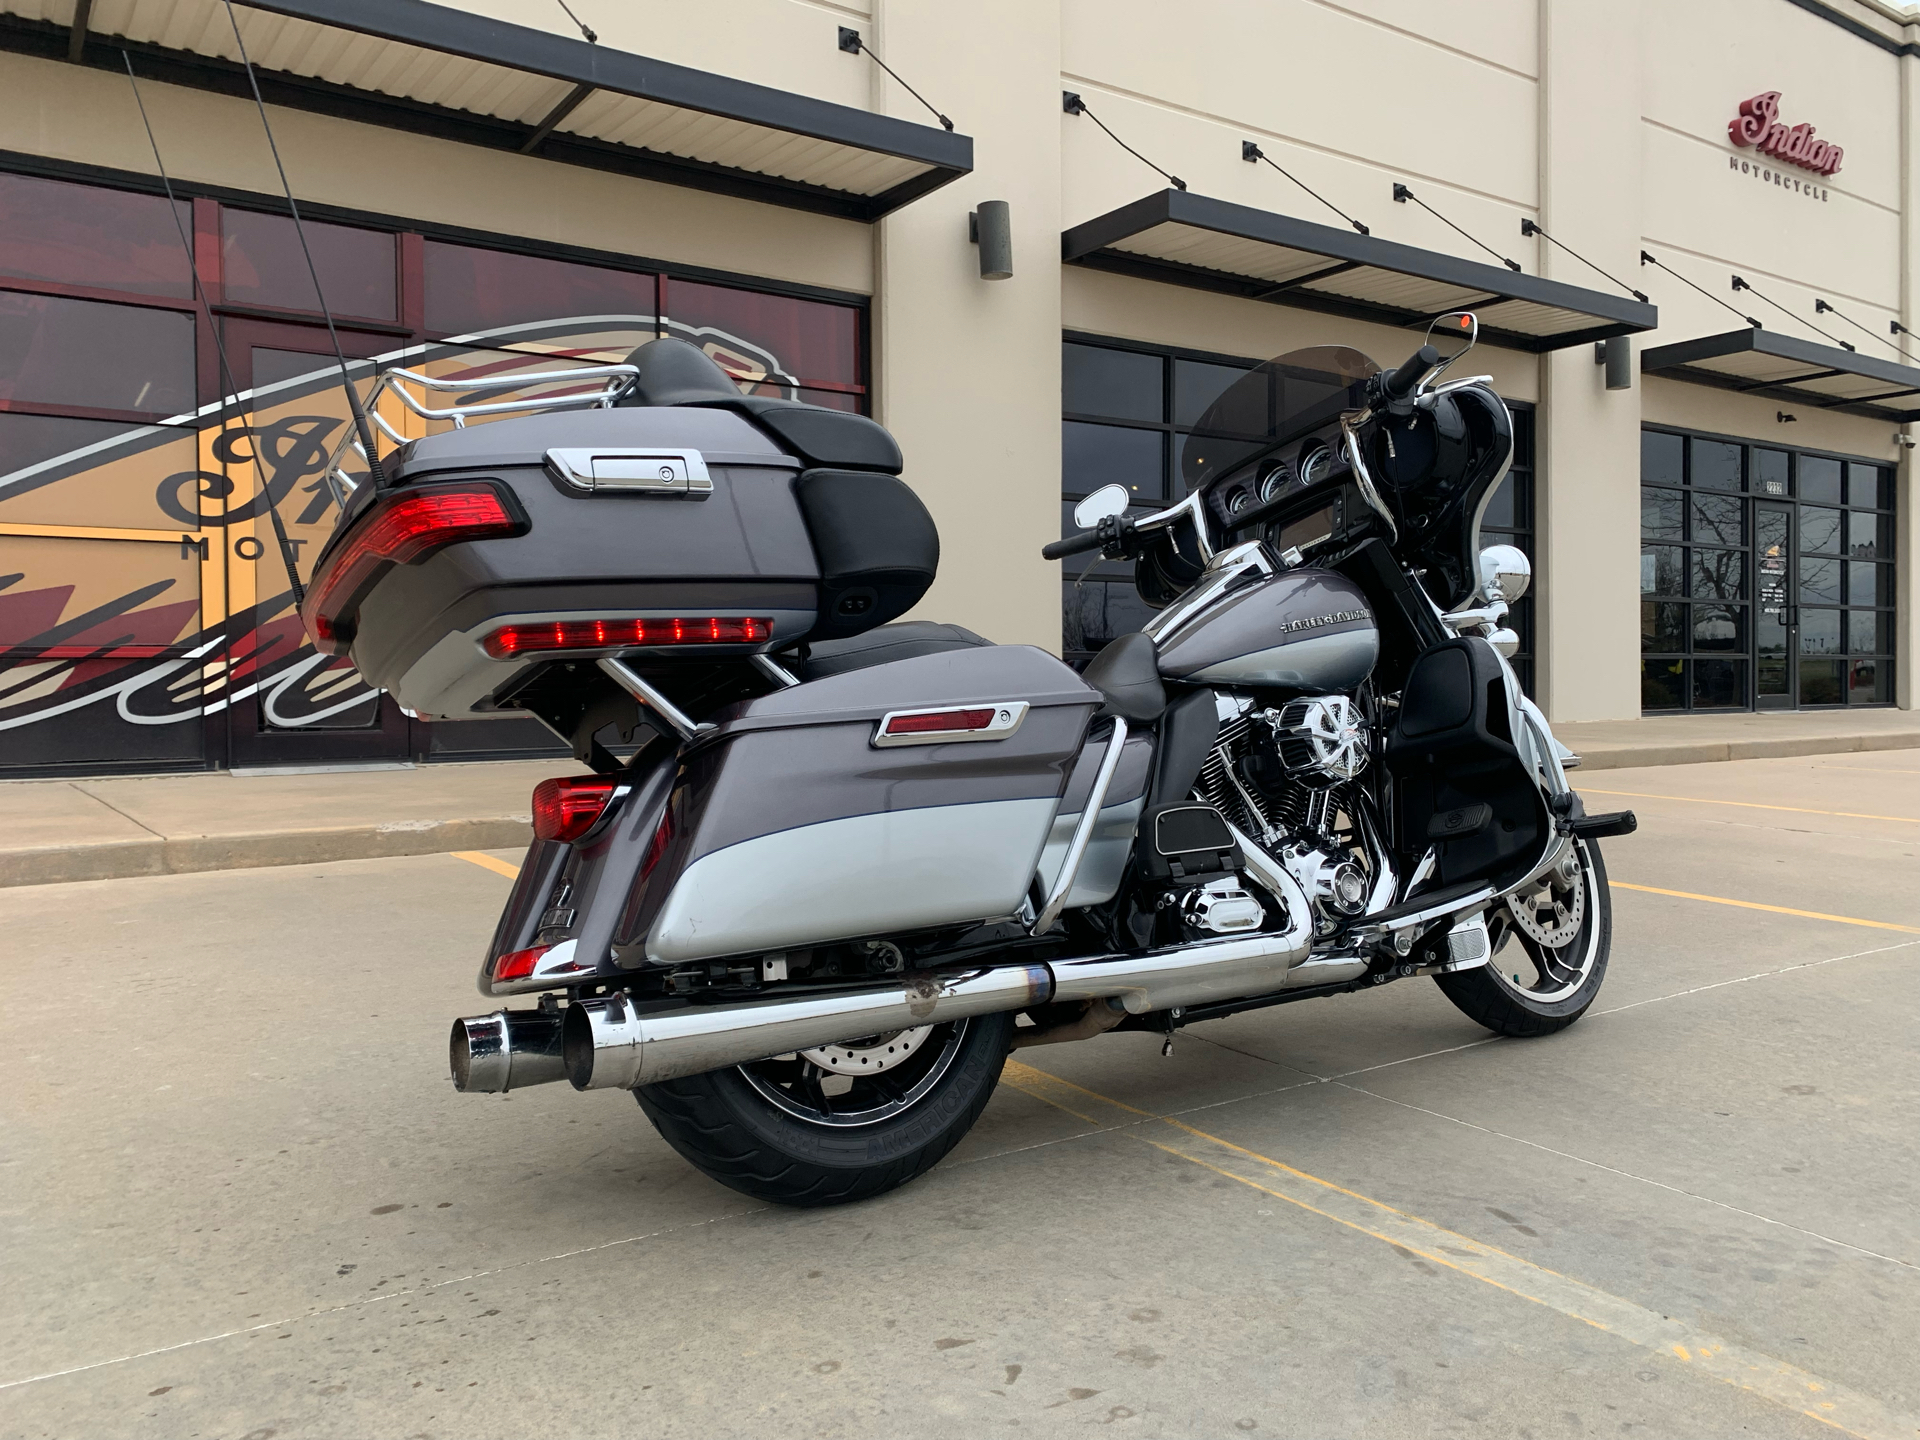 2014 Harley-Davidson Ultra Limited in Norman, Oklahoma - Photo 8